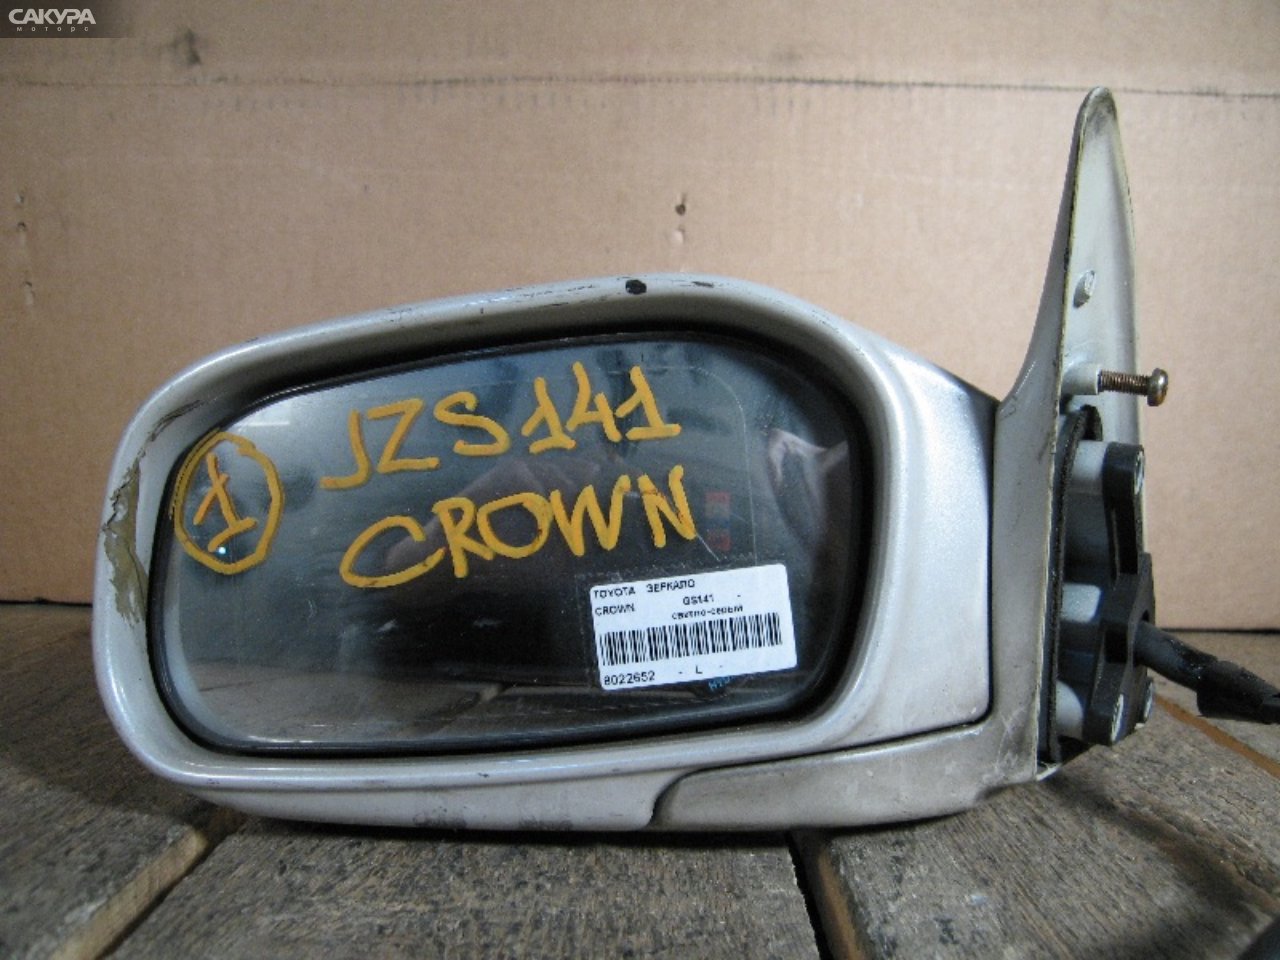 Зеркало боковое левое Toyota Crown GS141: купить в Сакура Абакан.